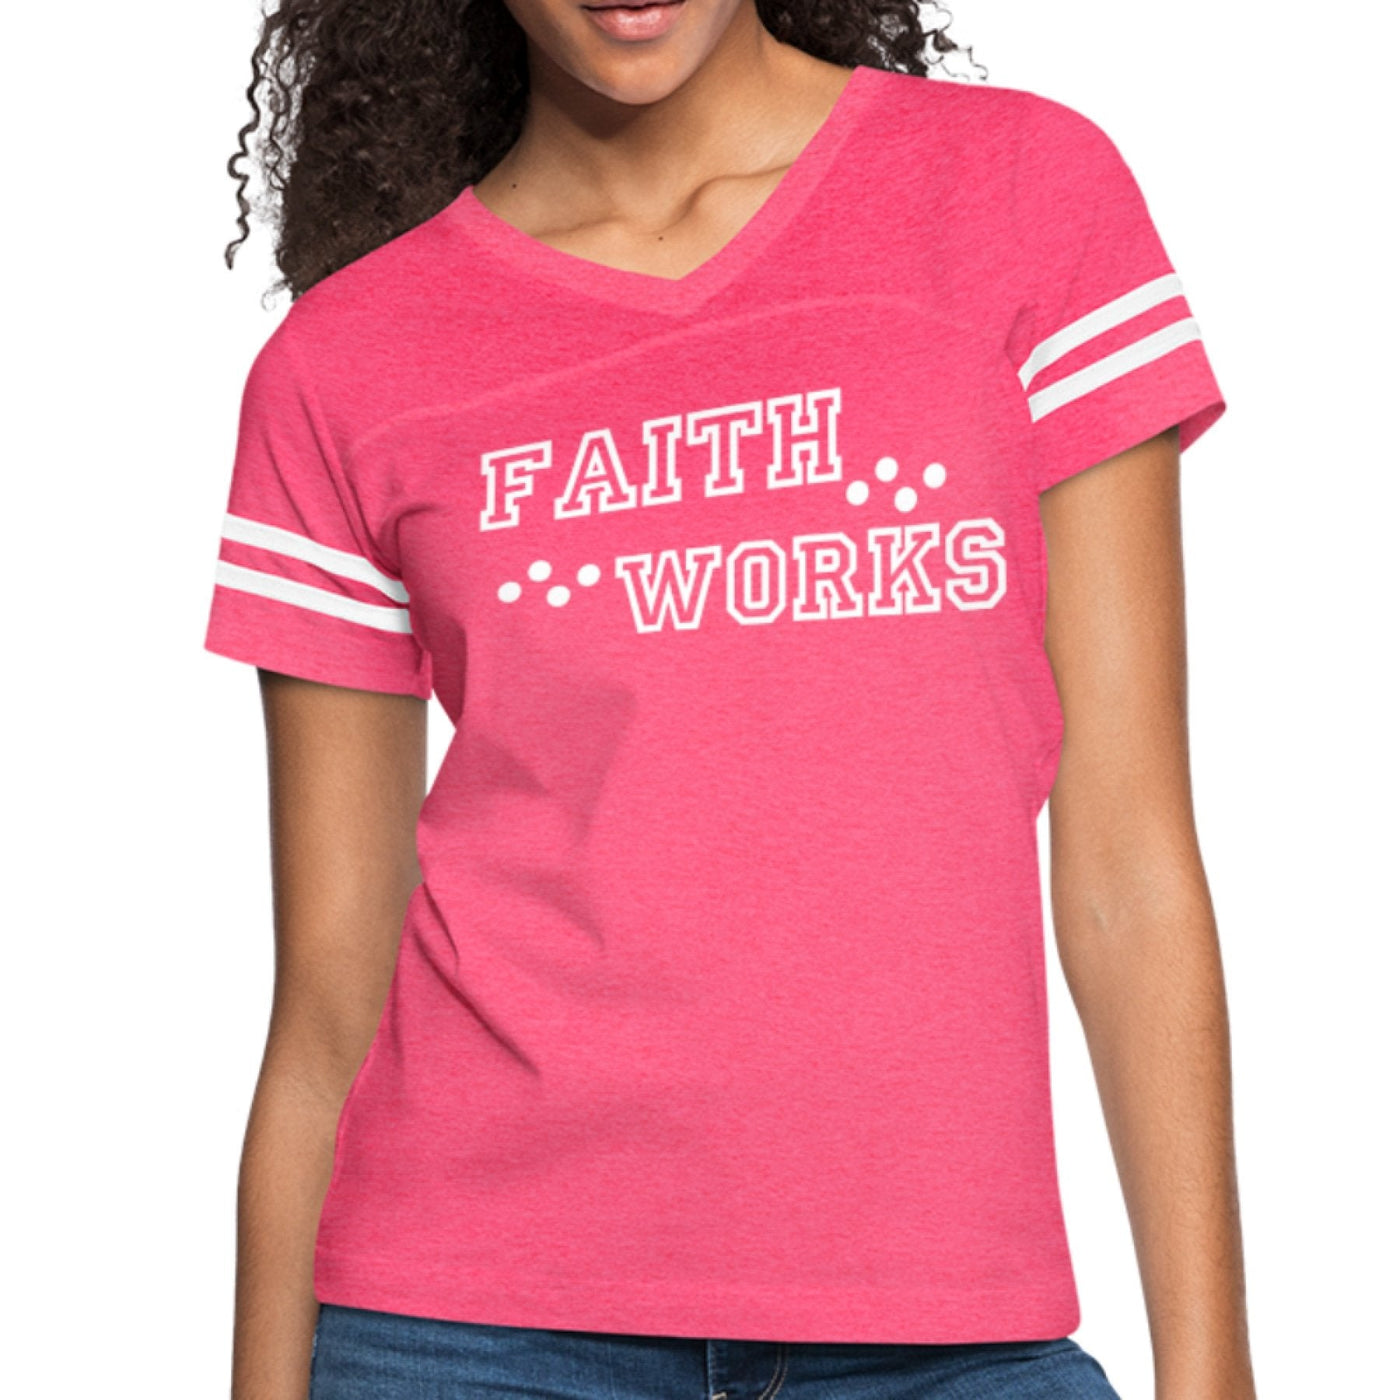 Womens Graphic Vintage Tee Faith Works Sport T-shirt - Womens | T-Shirts |